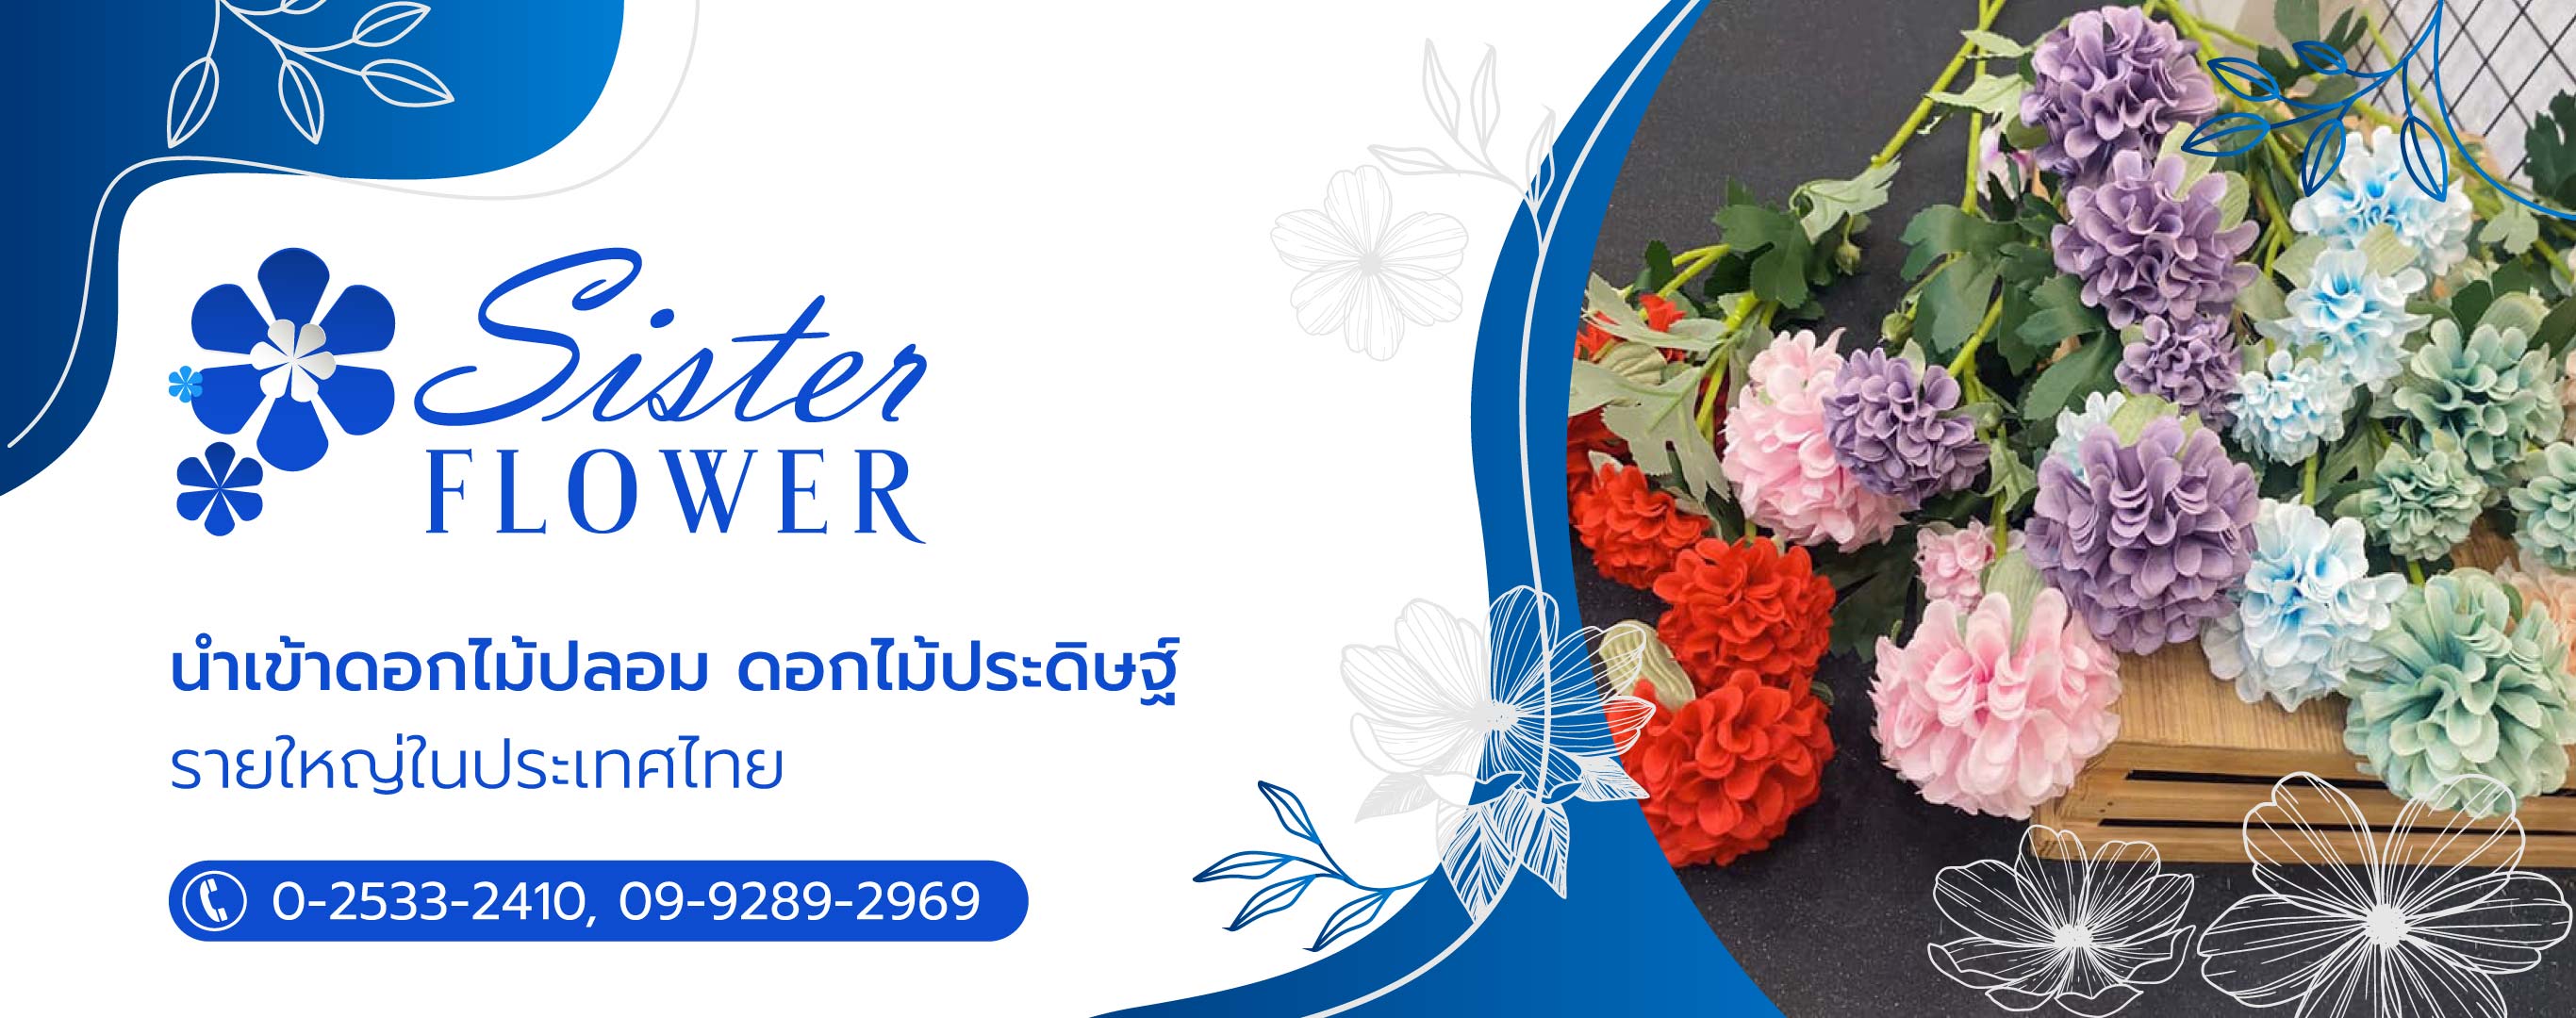 sisterflower แหล่งขายปลีกส่งดอกไม้ปลอม